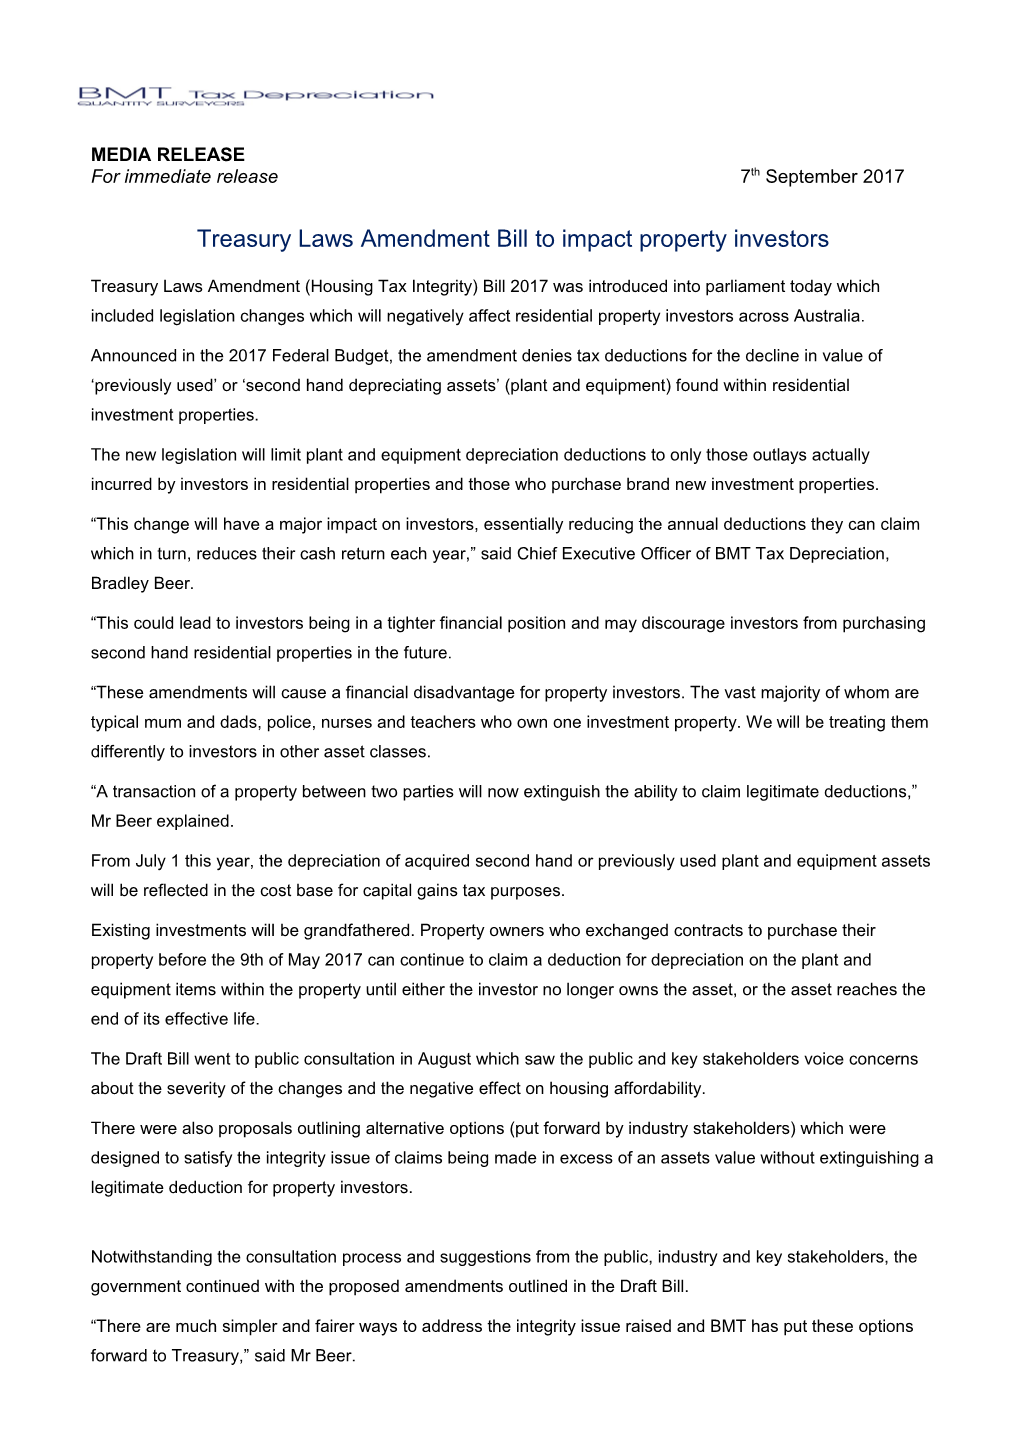 Treasury Laws Amendment Bill to Impact Property Investors